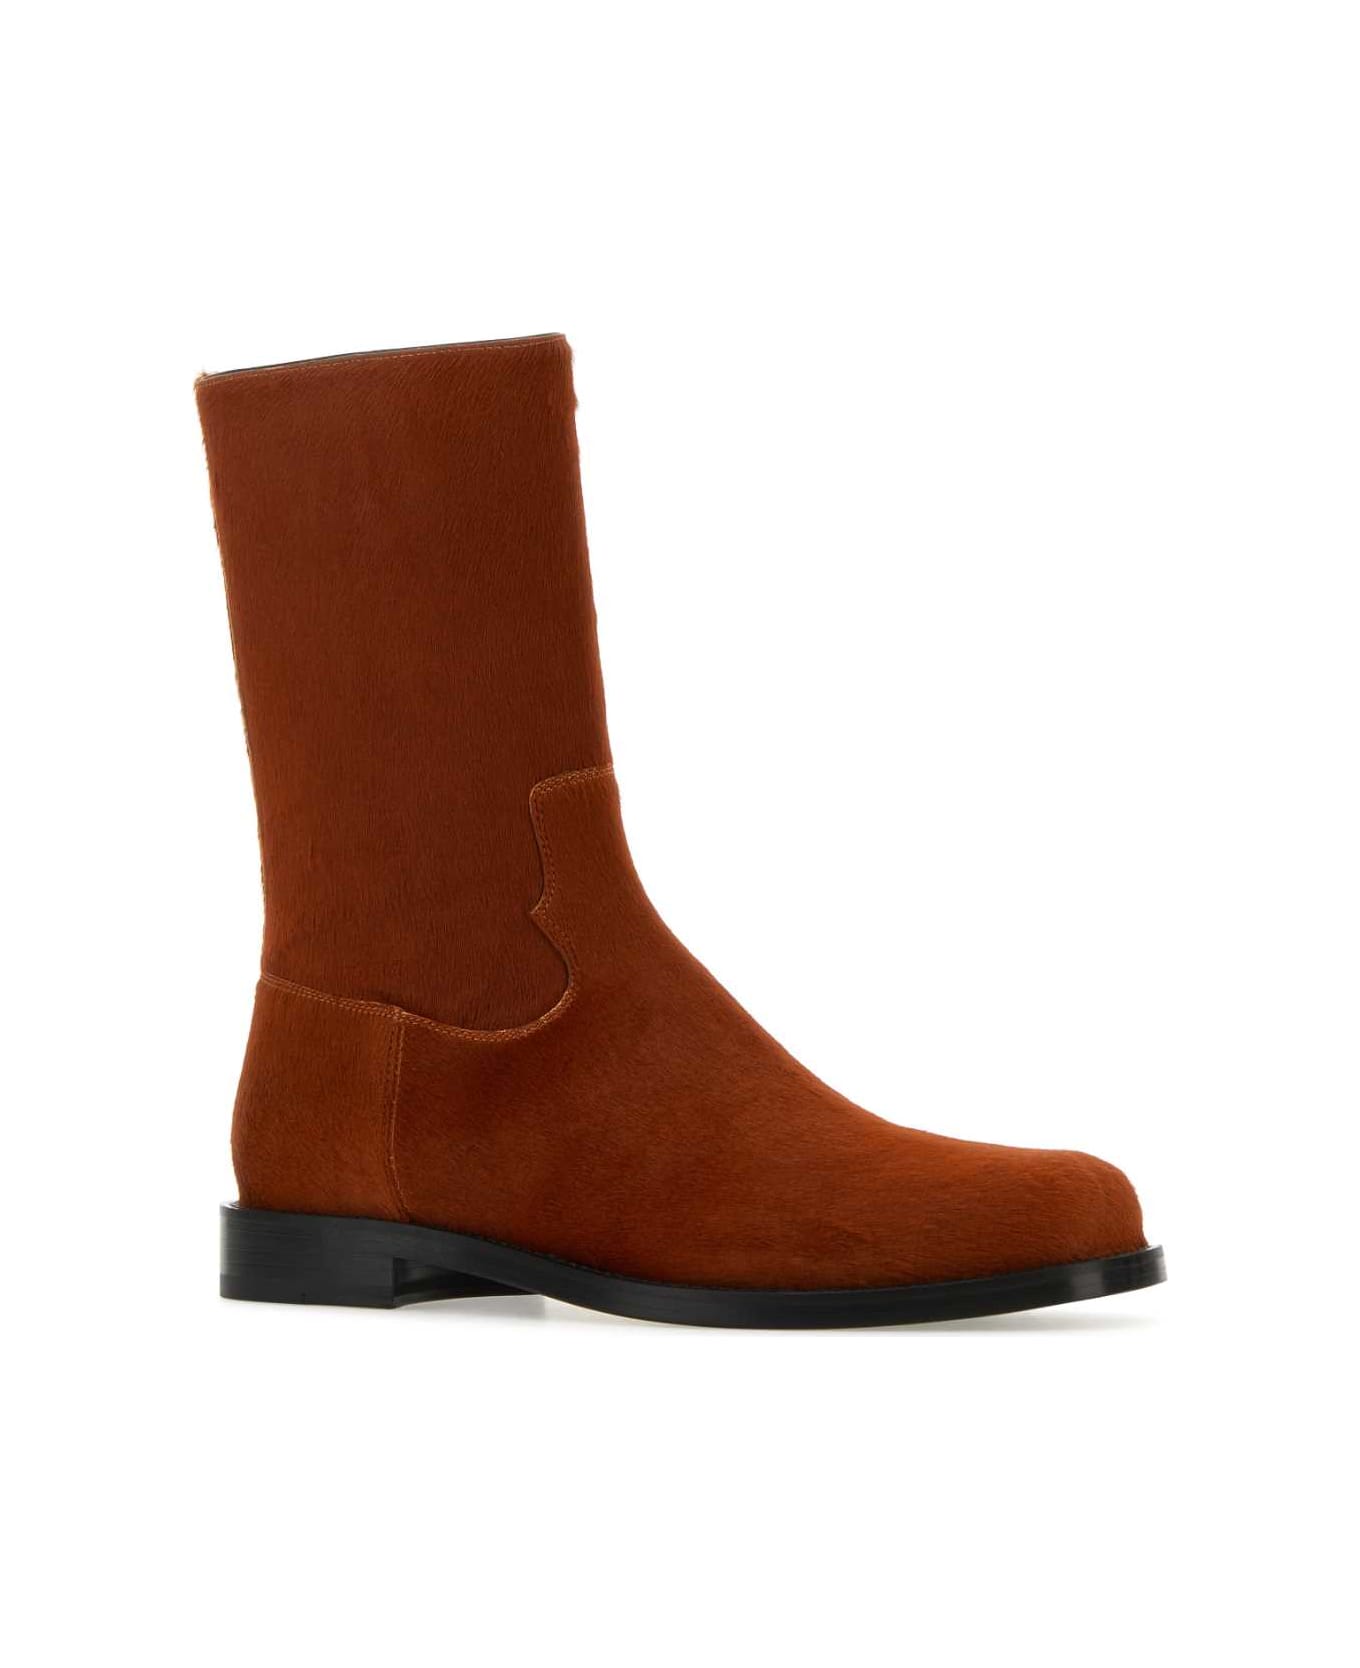 Dries Van Noten Brick Calfhair Ankle Boots - TAN ブーツ